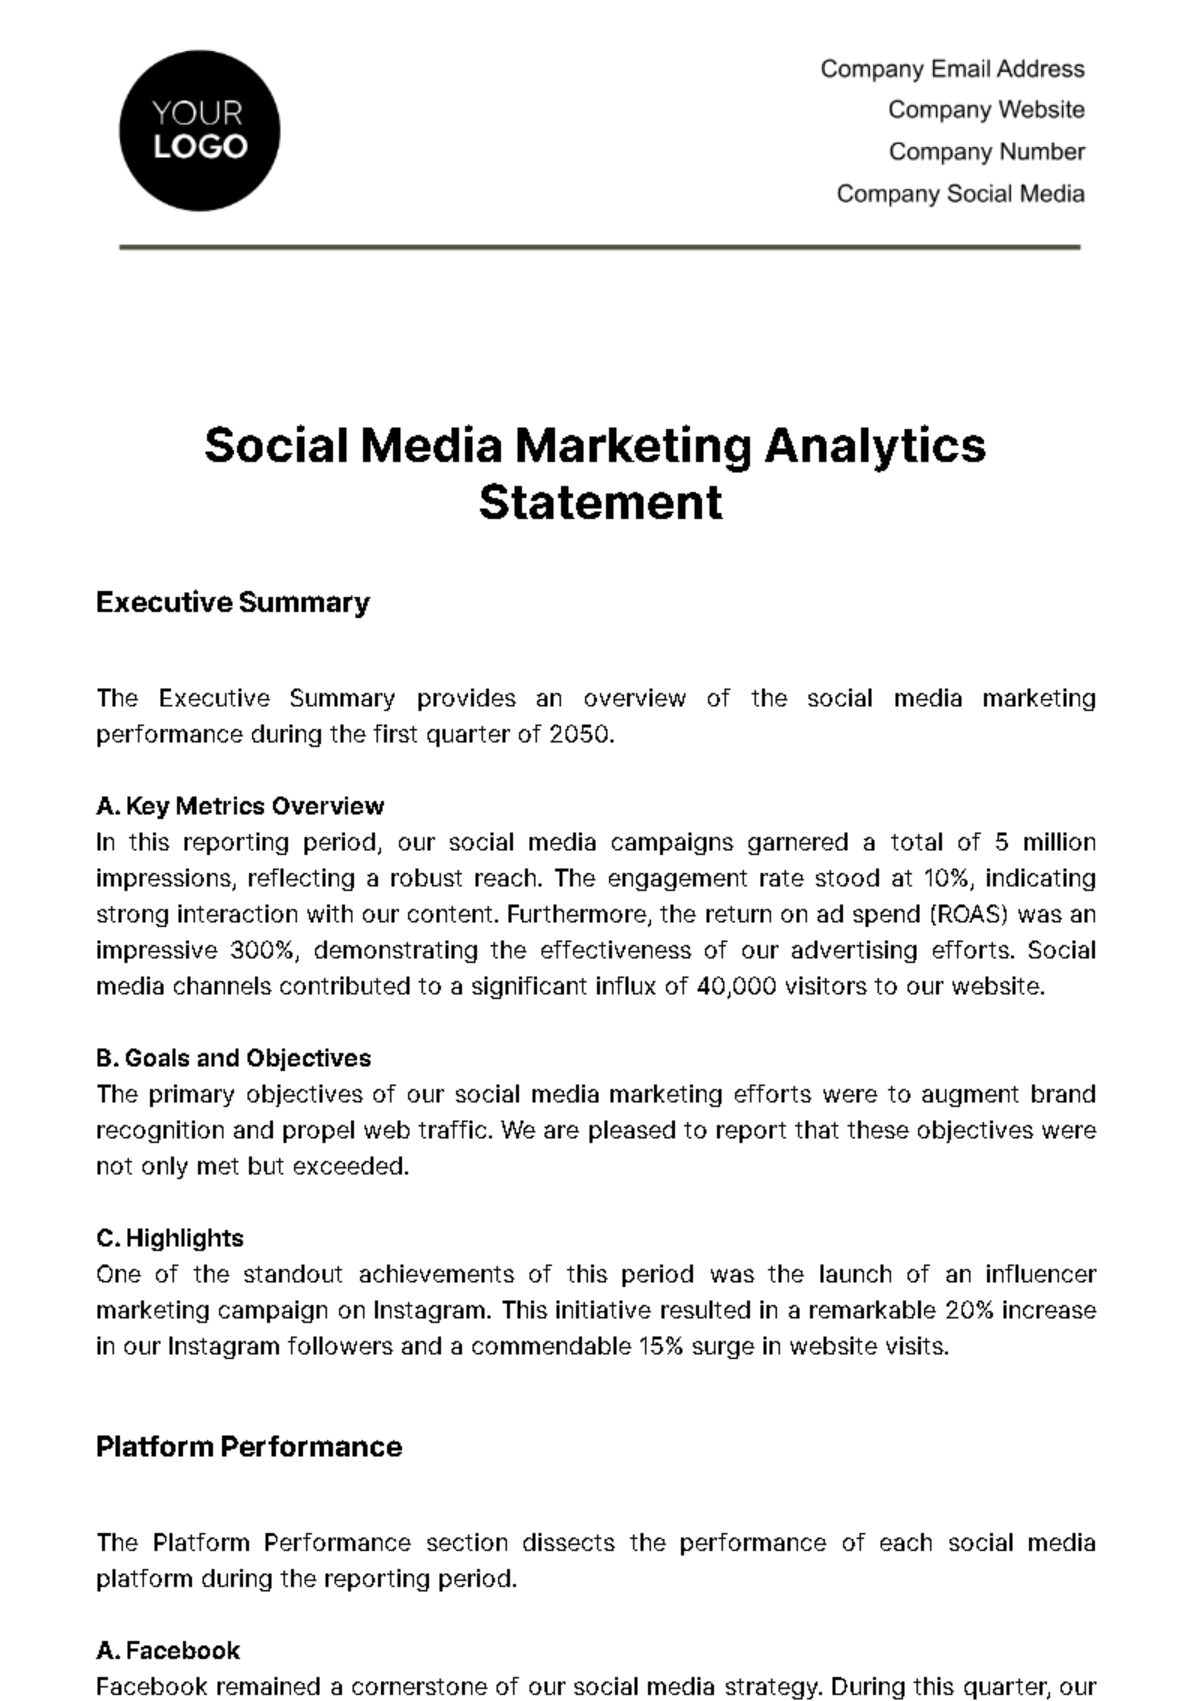 Social Media Marketing Analytics Statement Template